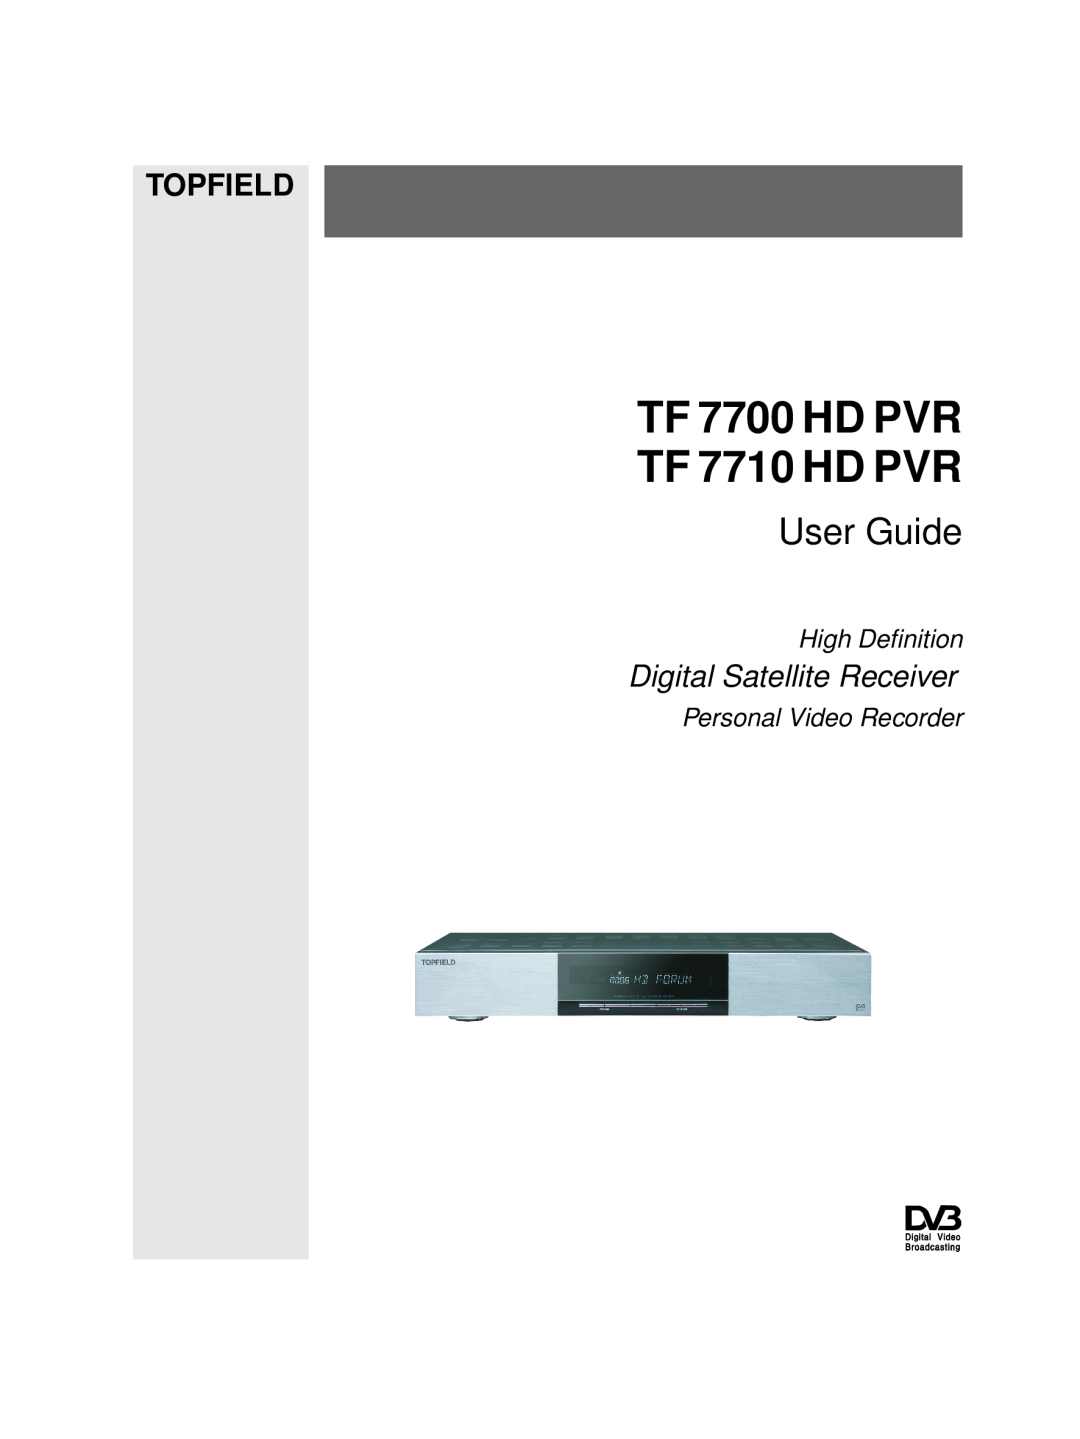 Topfield manual High Deﬁnition, Personal Video Recorder, TF 7700 HD PVR TF 7710 HD PVR, User Guide, Topfield 